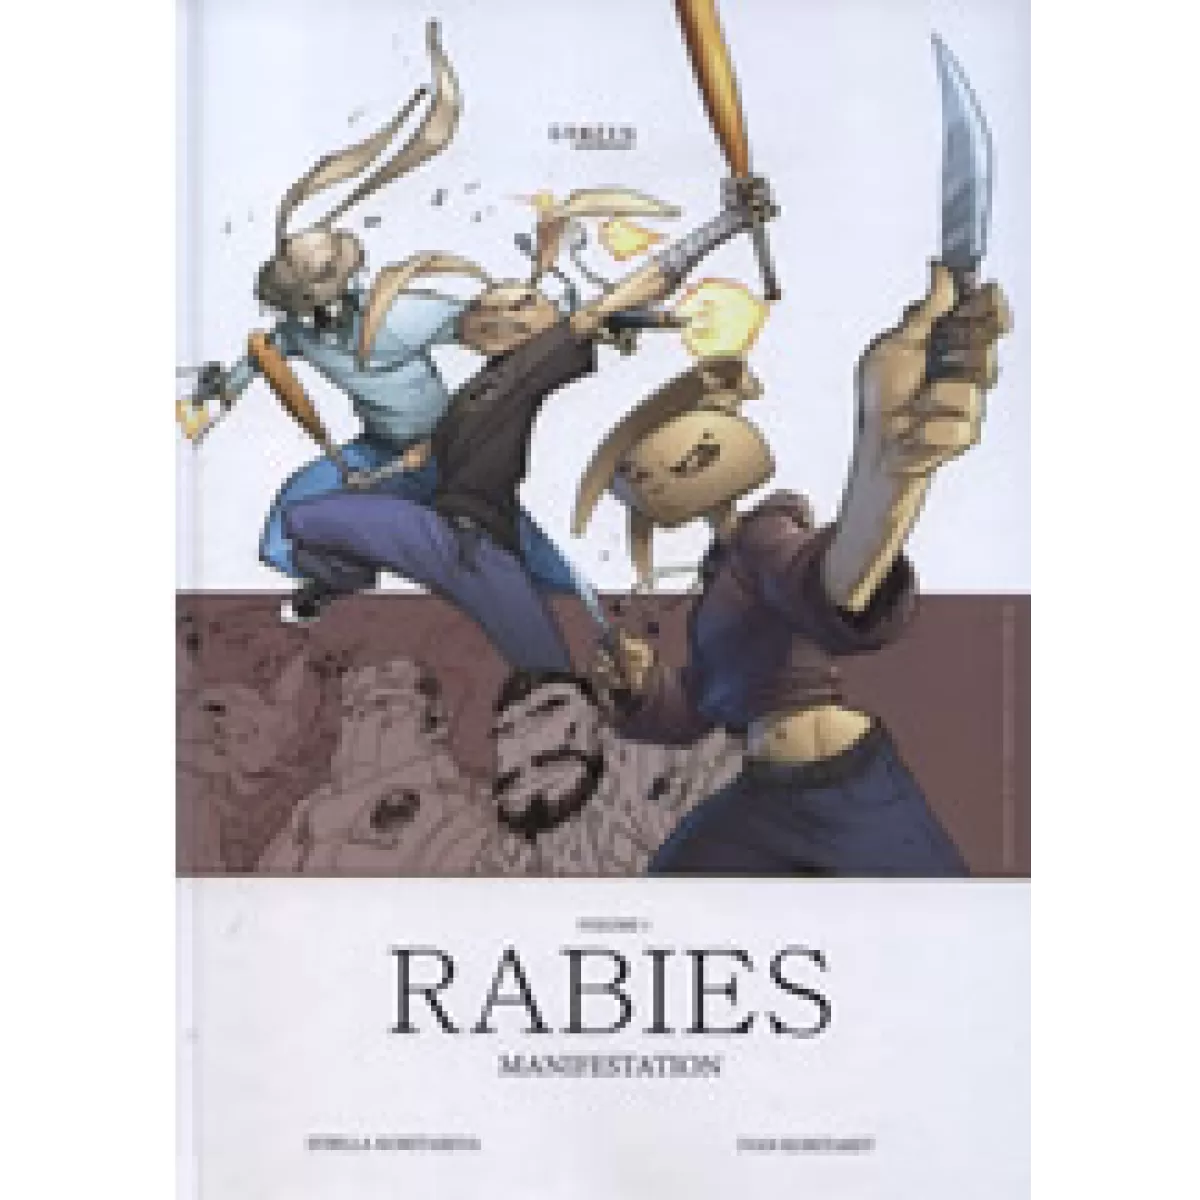 Rabies, Volume 1: Manifestation